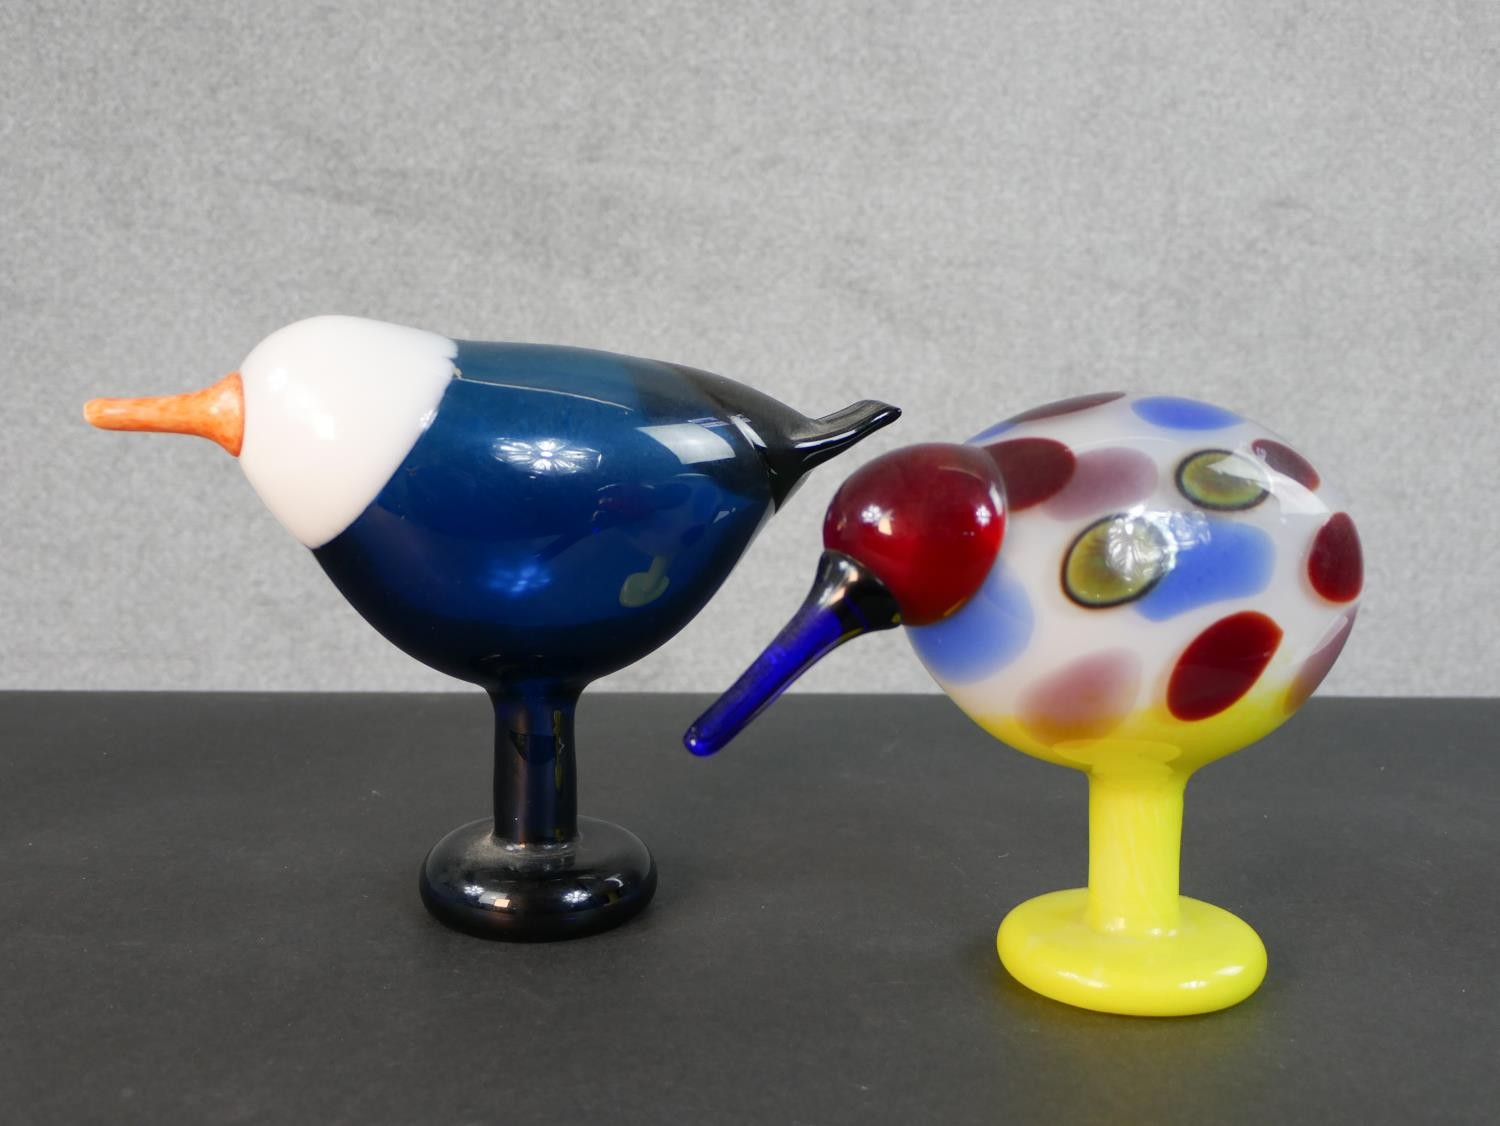 Two Iittala art glass birds by Oiva Toikka, Blue Magpie bird with applied Iittala label and acid